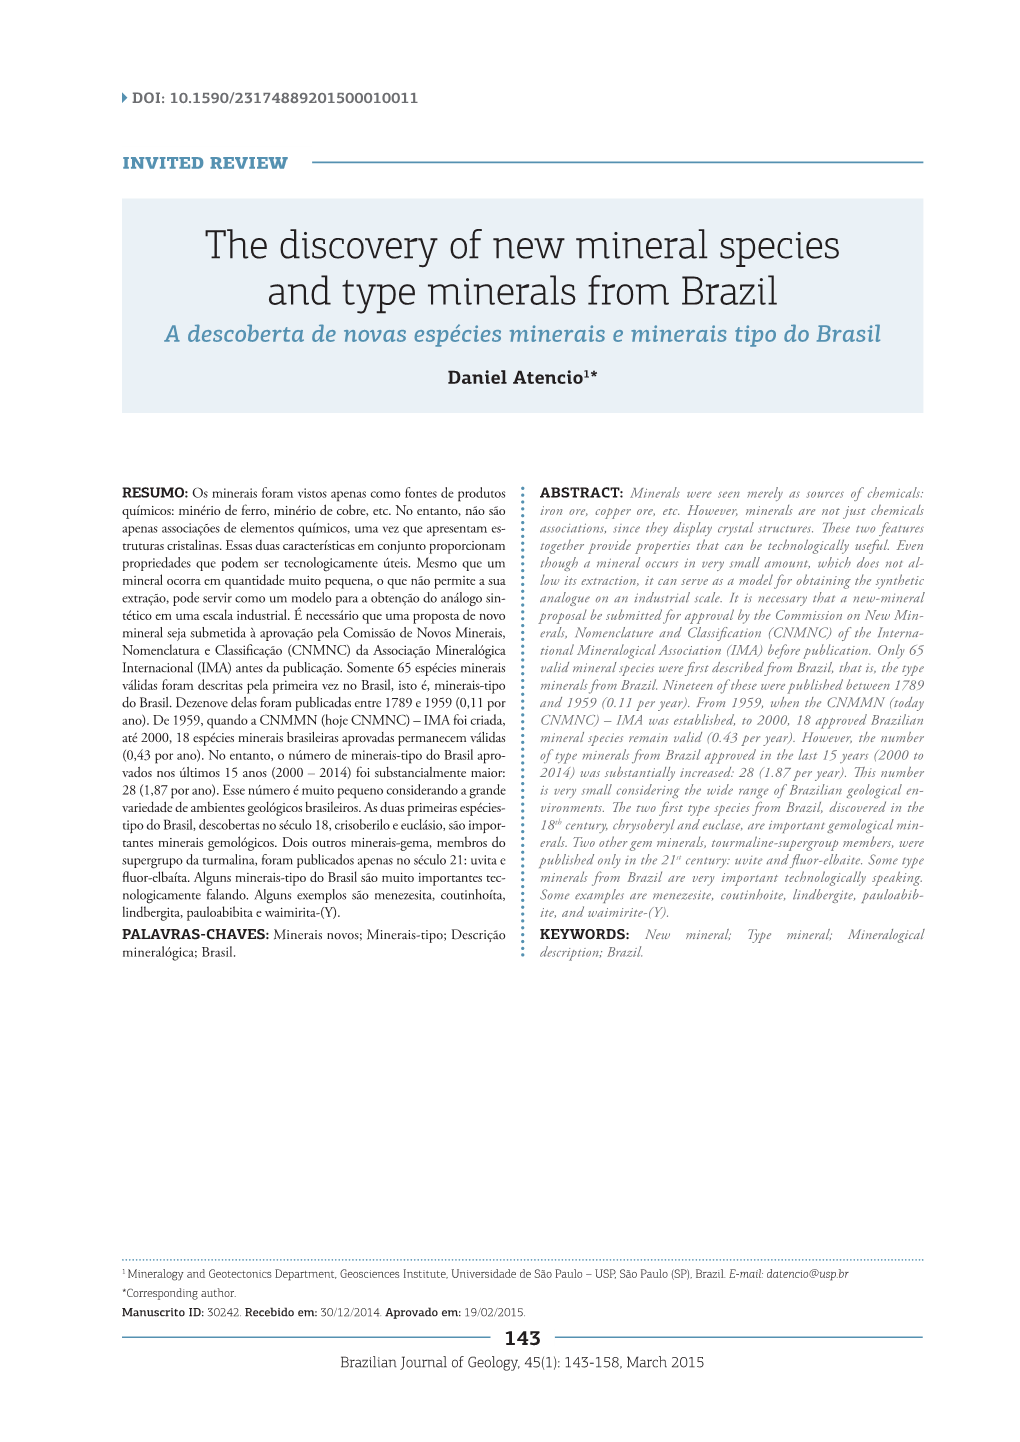 The Discovery of New Mineral Species and Type Minerals from Brazil a Descoberta De Novas Espécies Minerais E Minerais Tipo Do Brasil